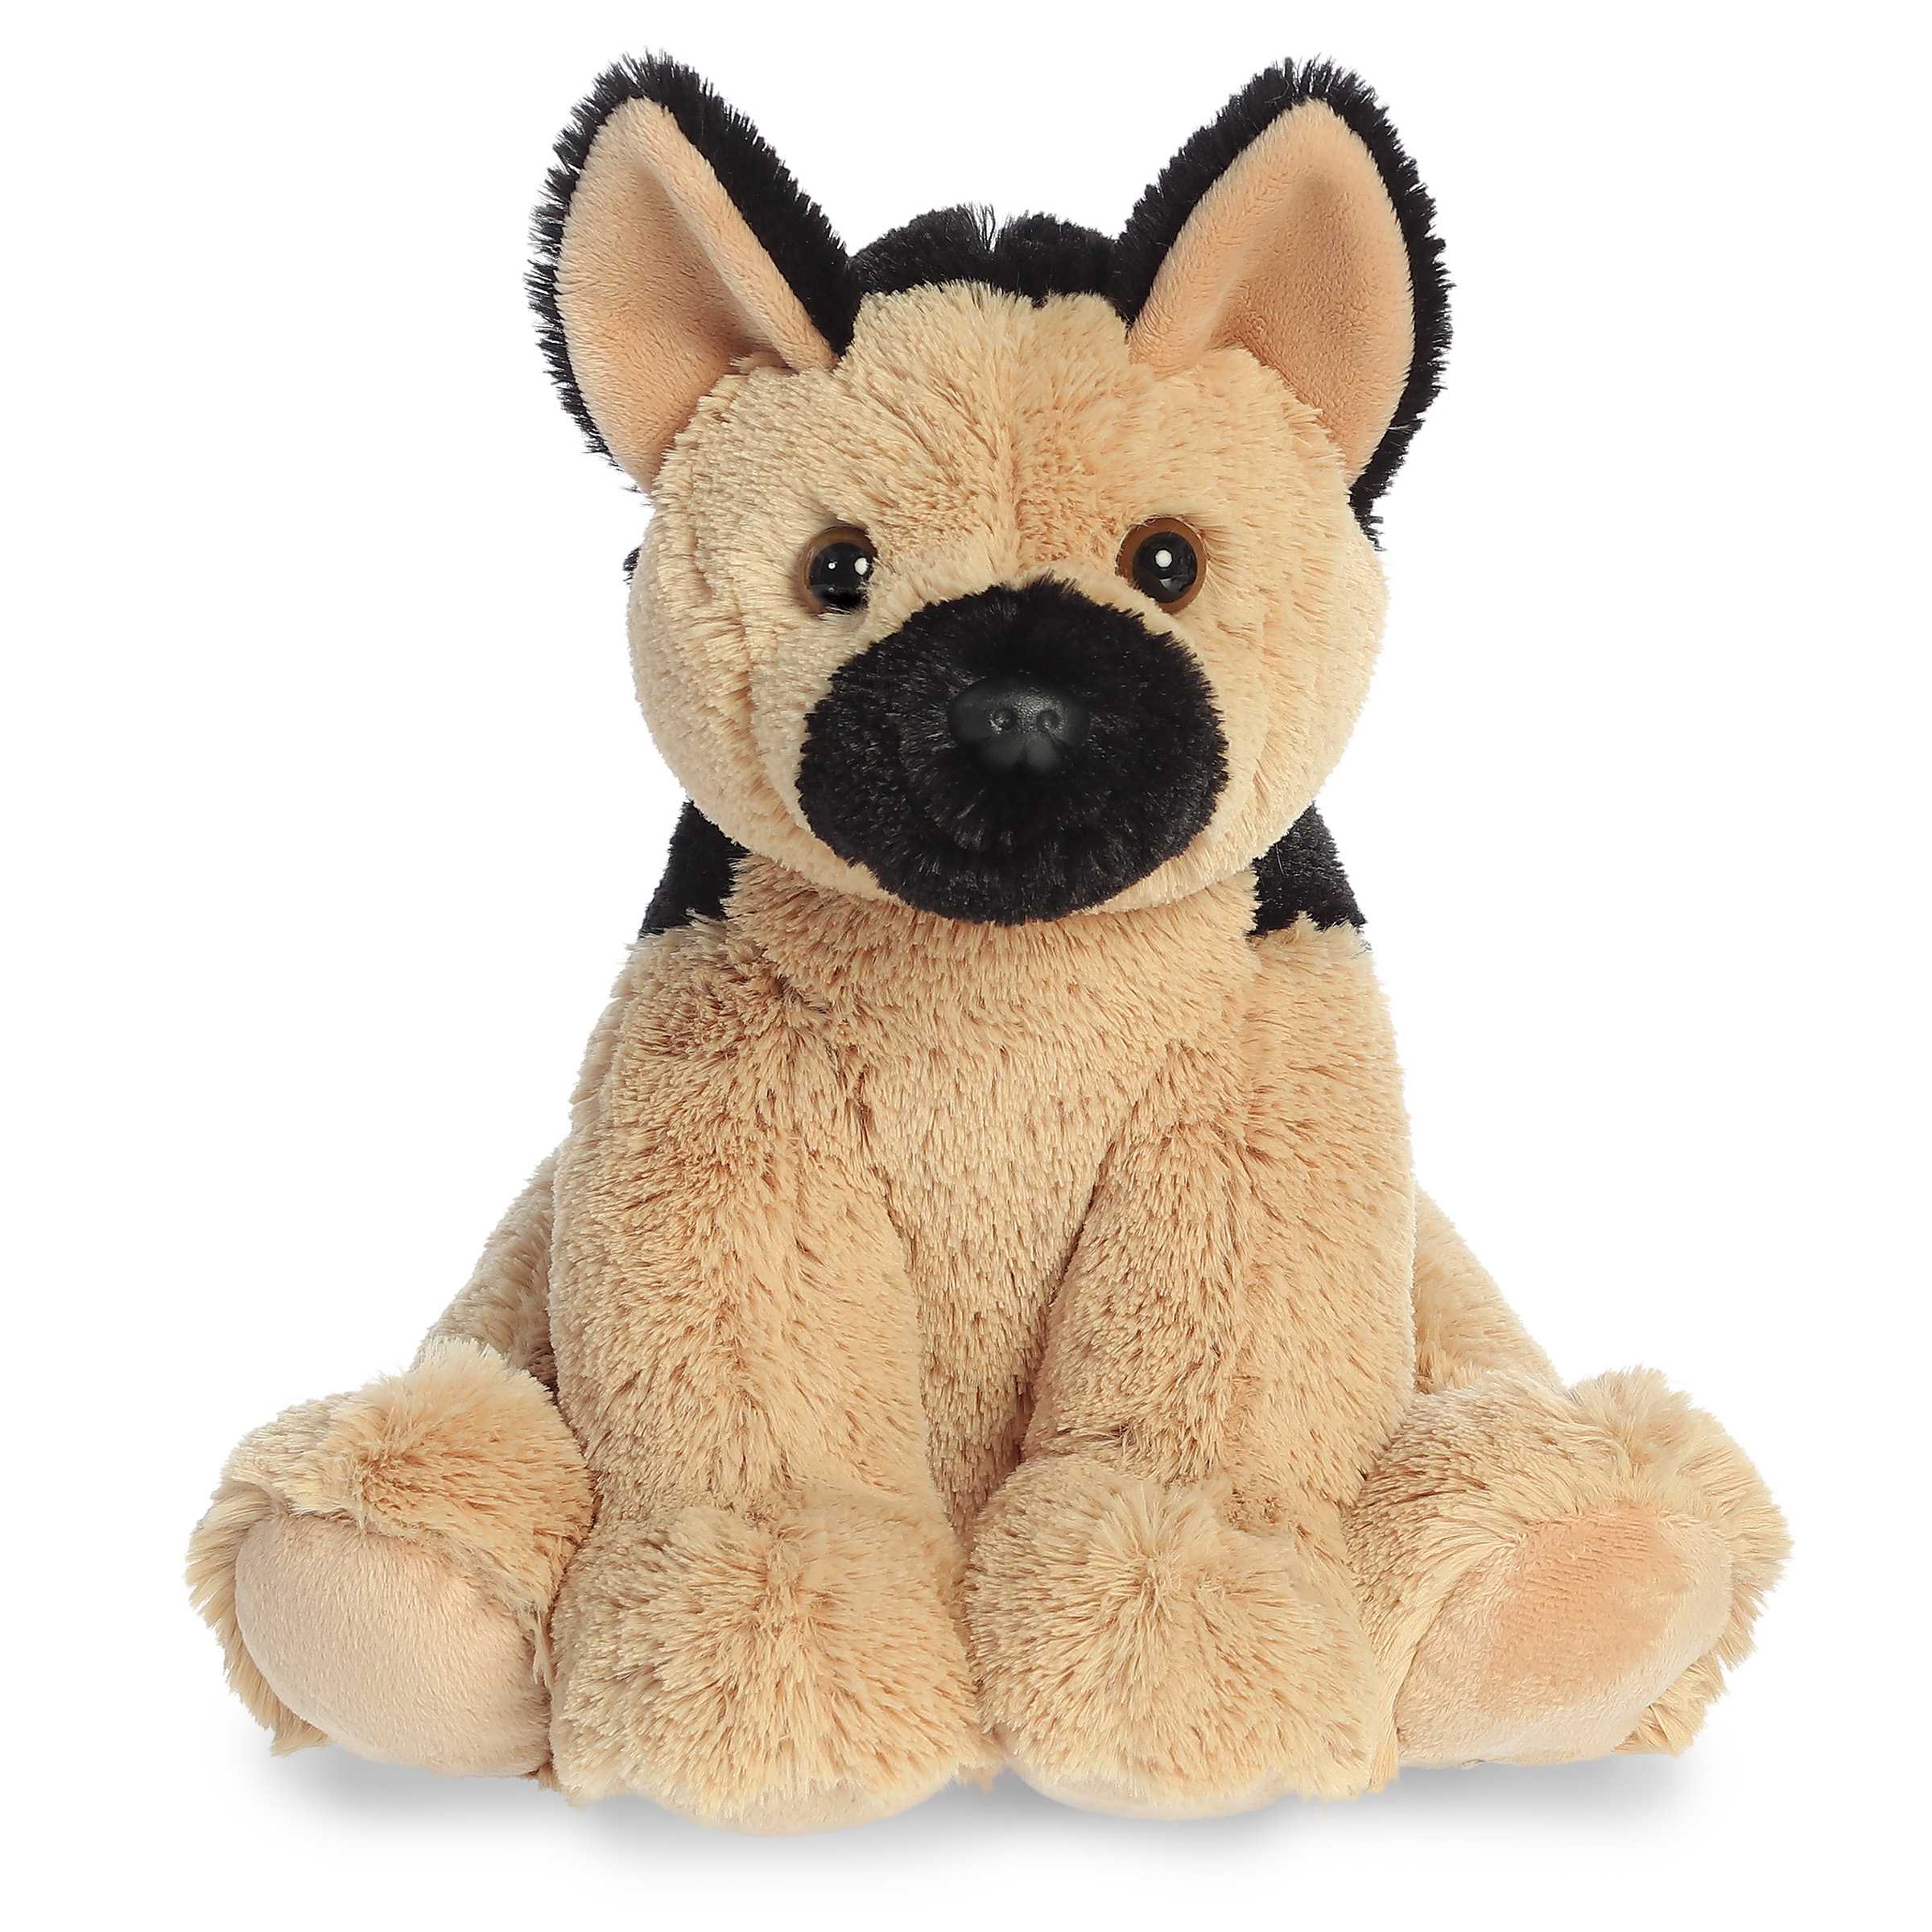 Aurora stuffed animal German Shepherd Plush with attentive eyes and black and tan coat.